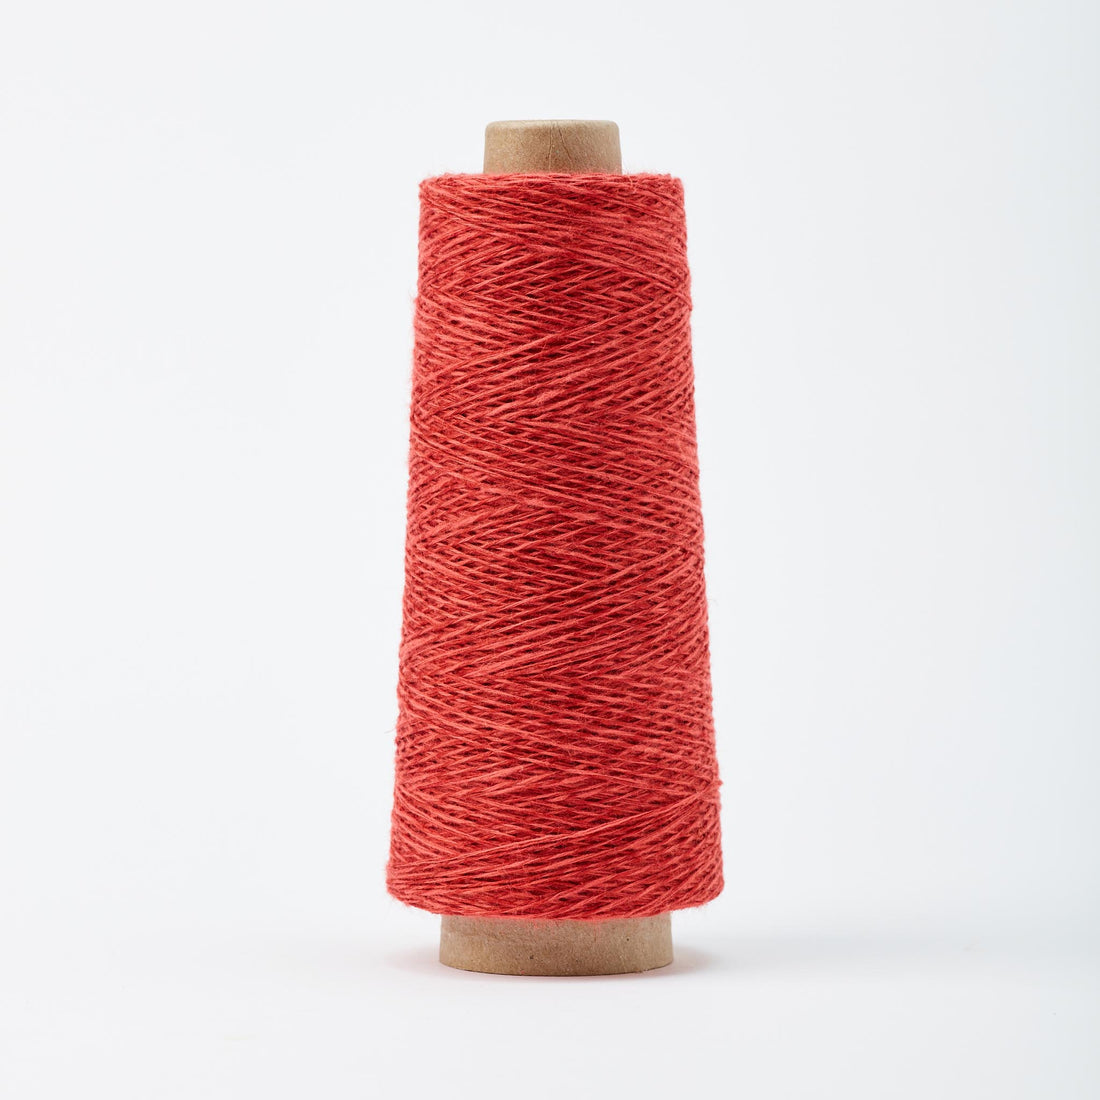 Gist yarn Duet Cotton Linen Irene textile Coton lin tissage weaving yarn